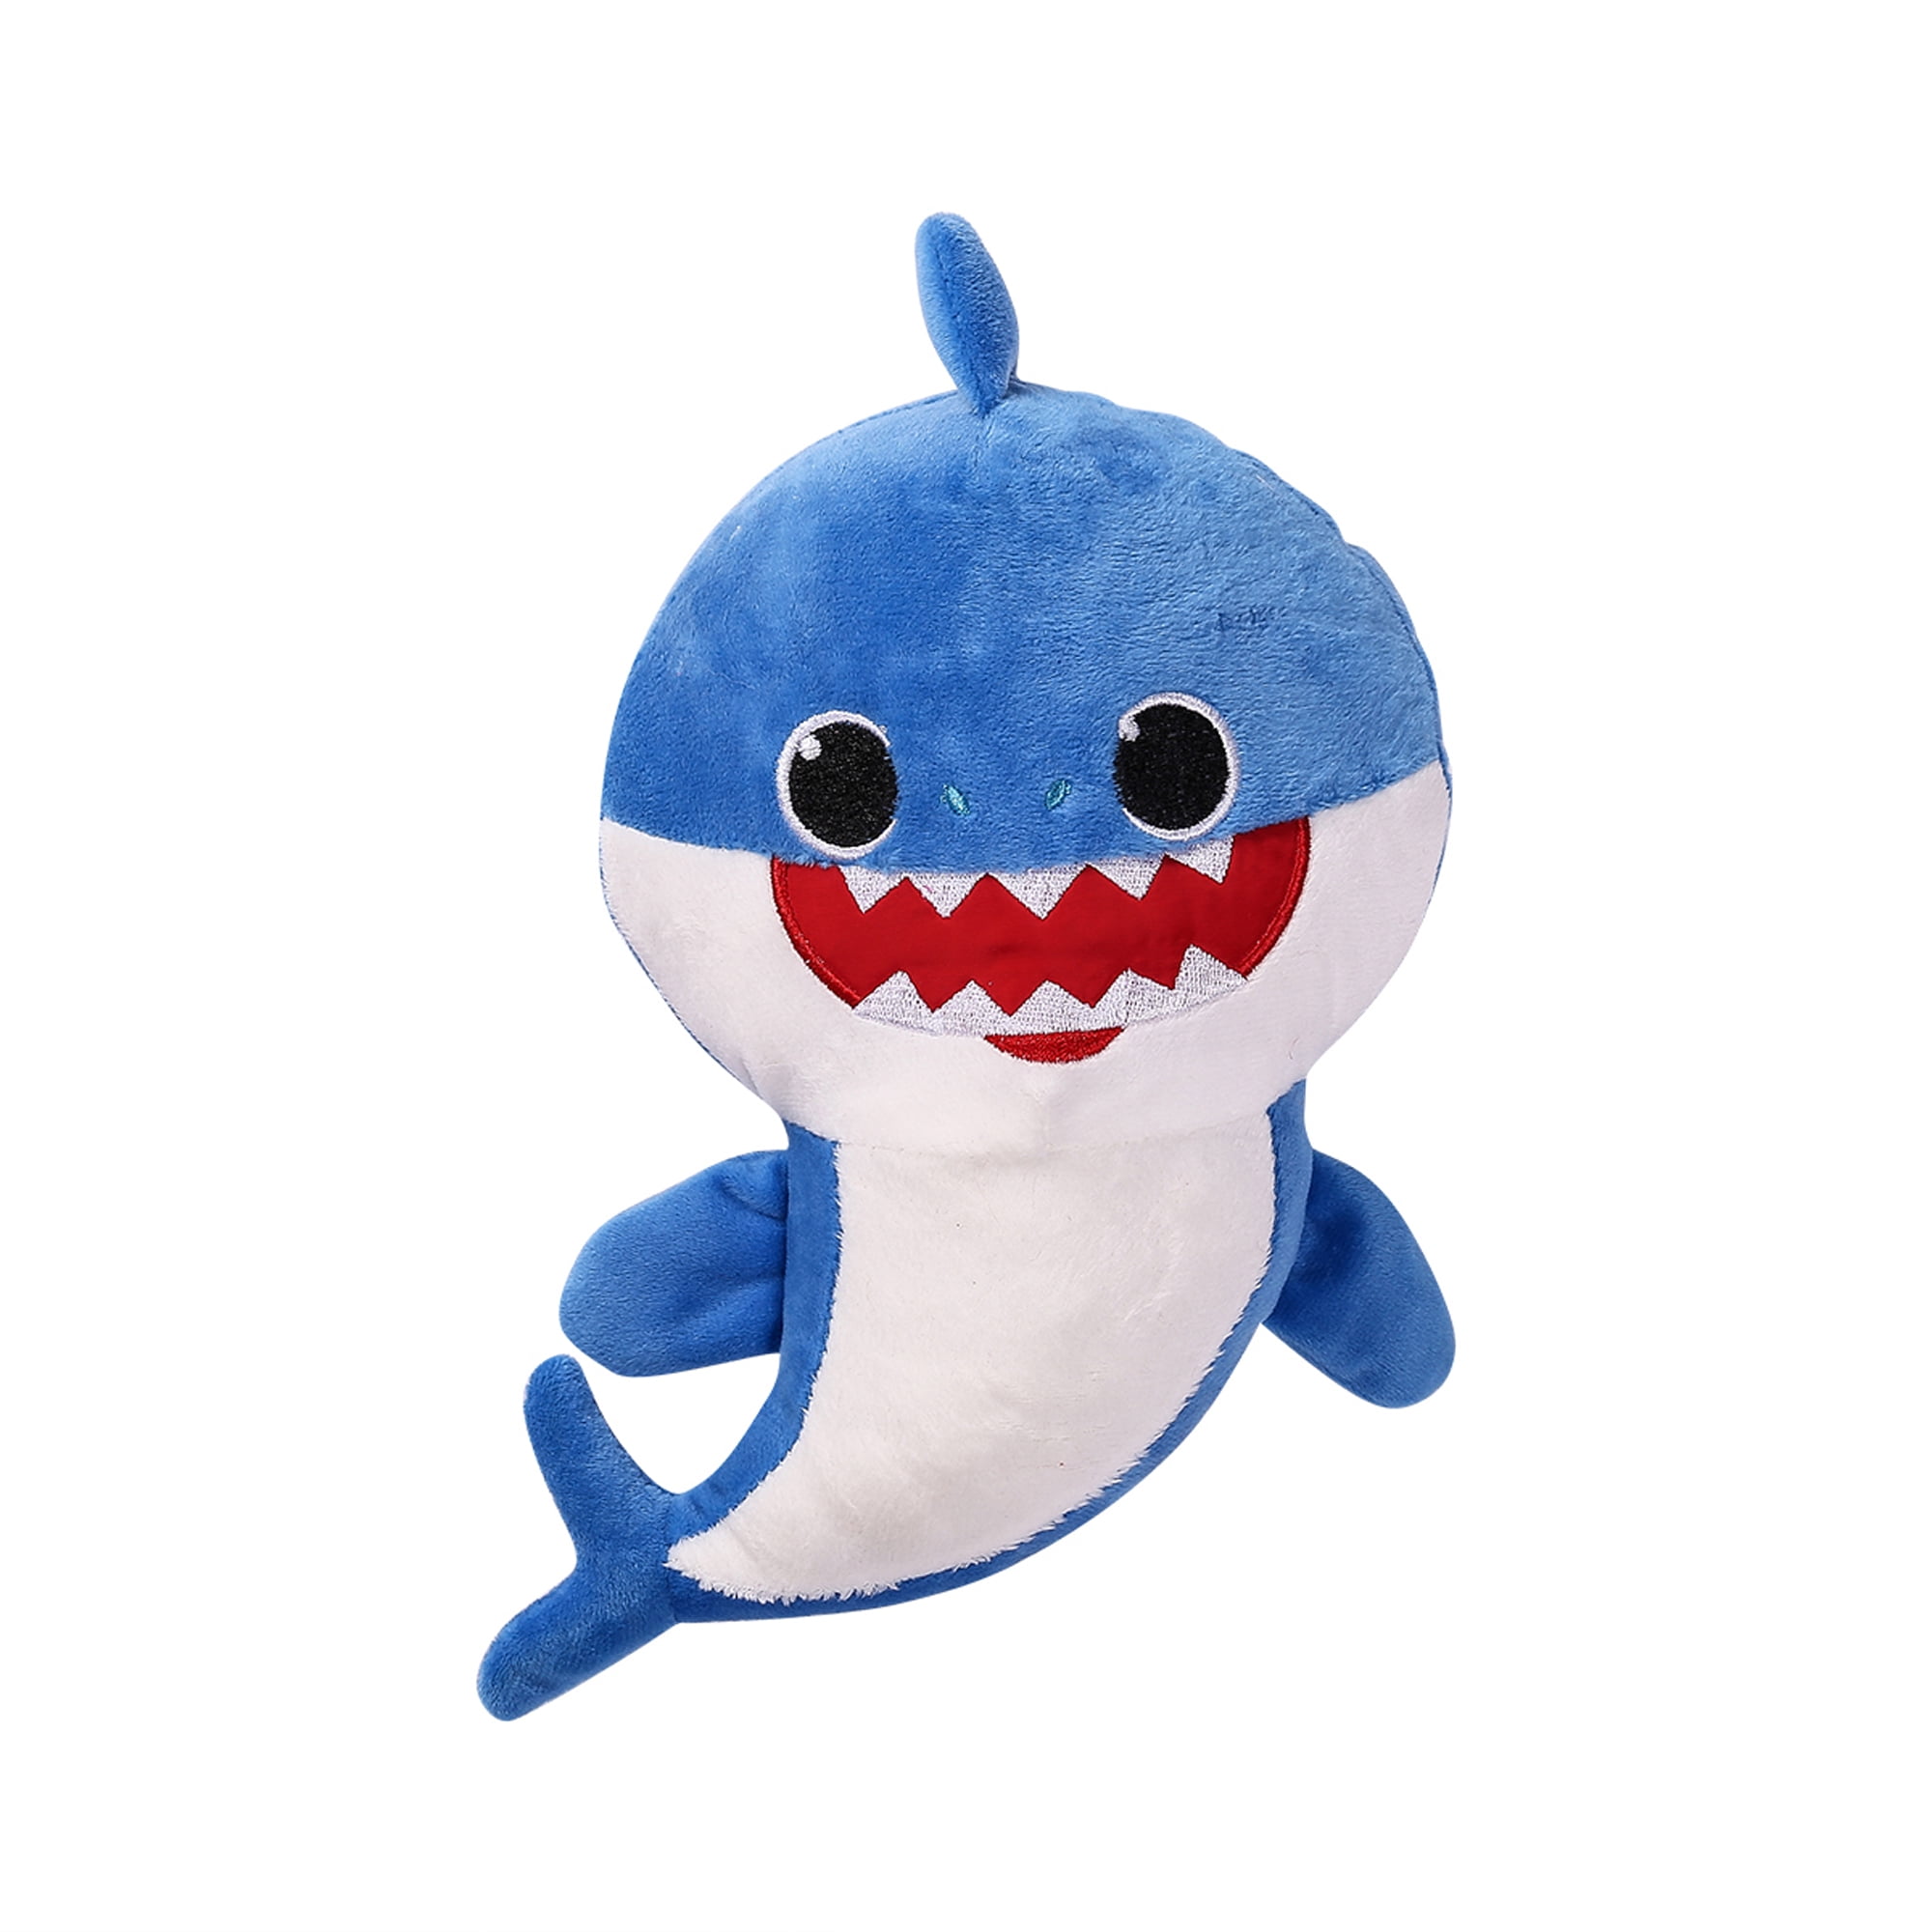 Baby Shark Plush Singing LED Light Plush Toys Music Doll English Song Toy Gift 